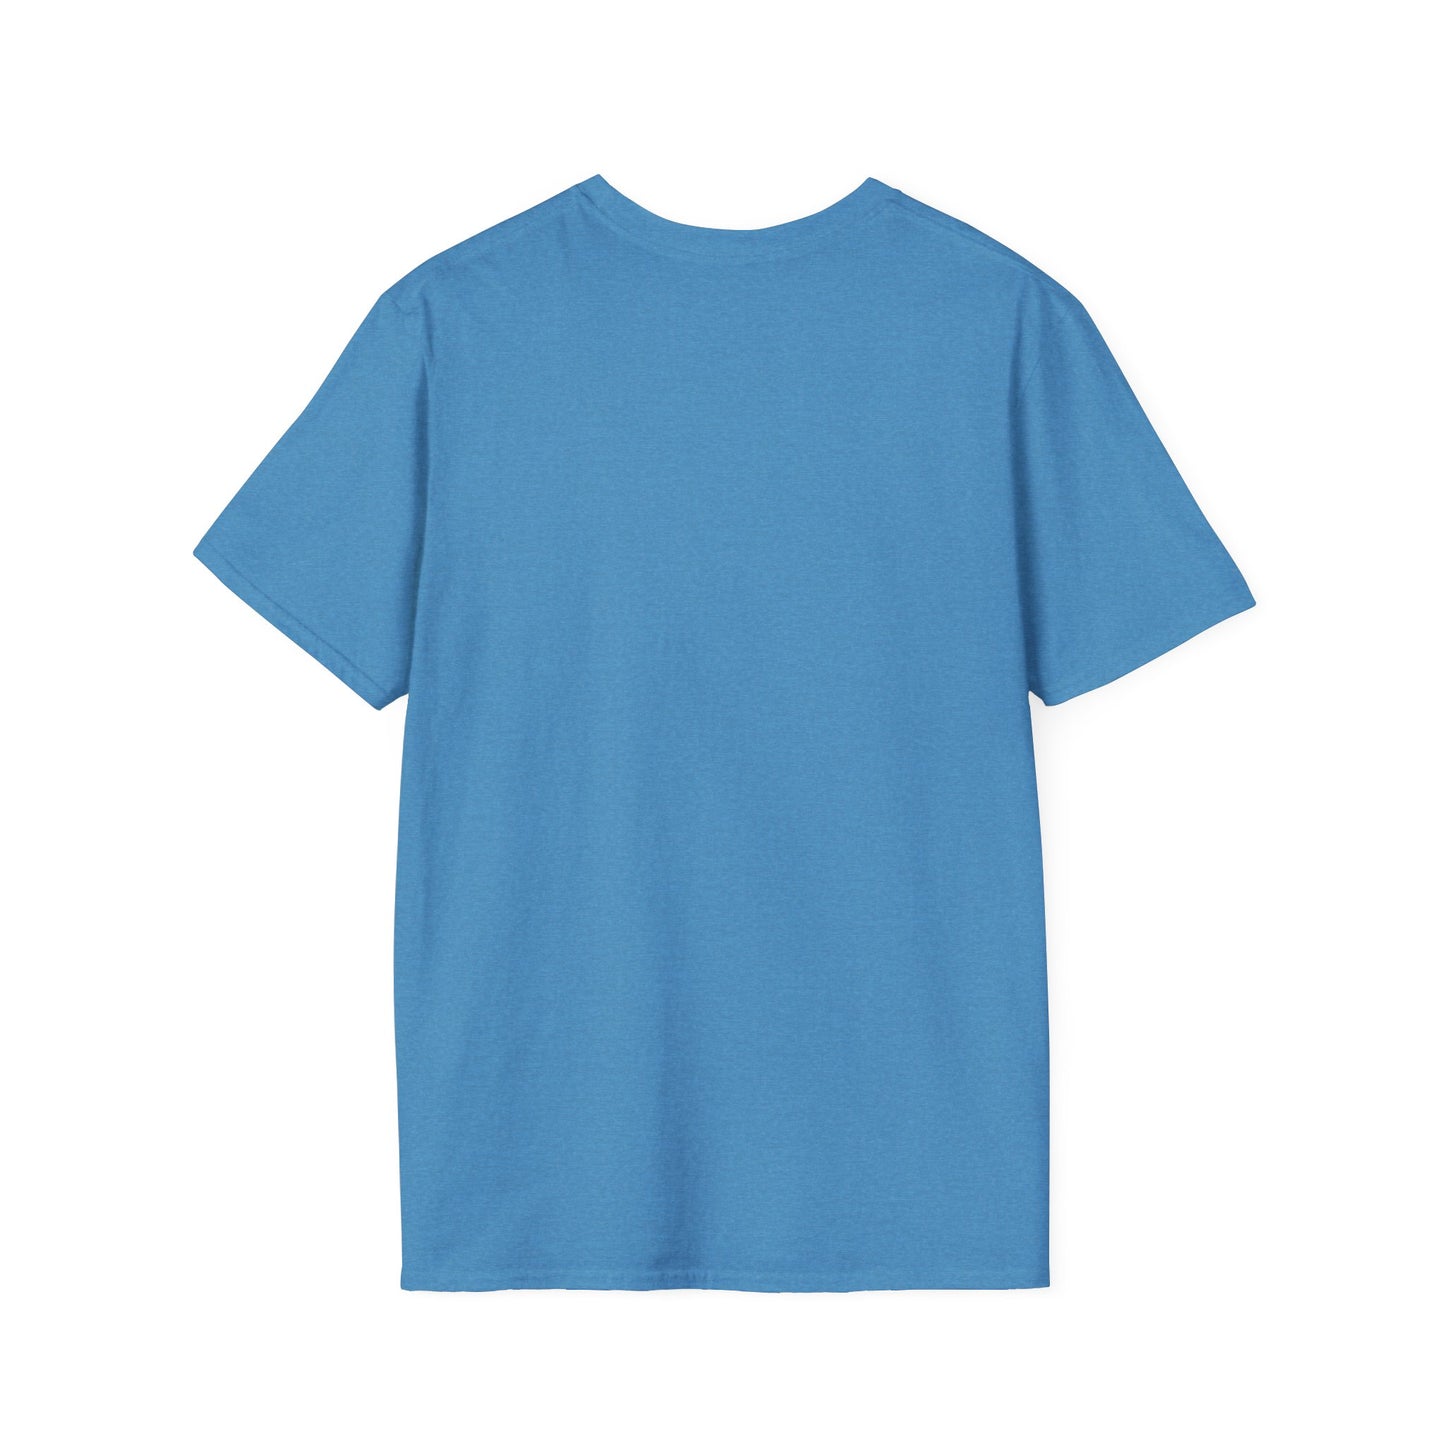 Softball Mom - Unisex Softstyle T-Shirt